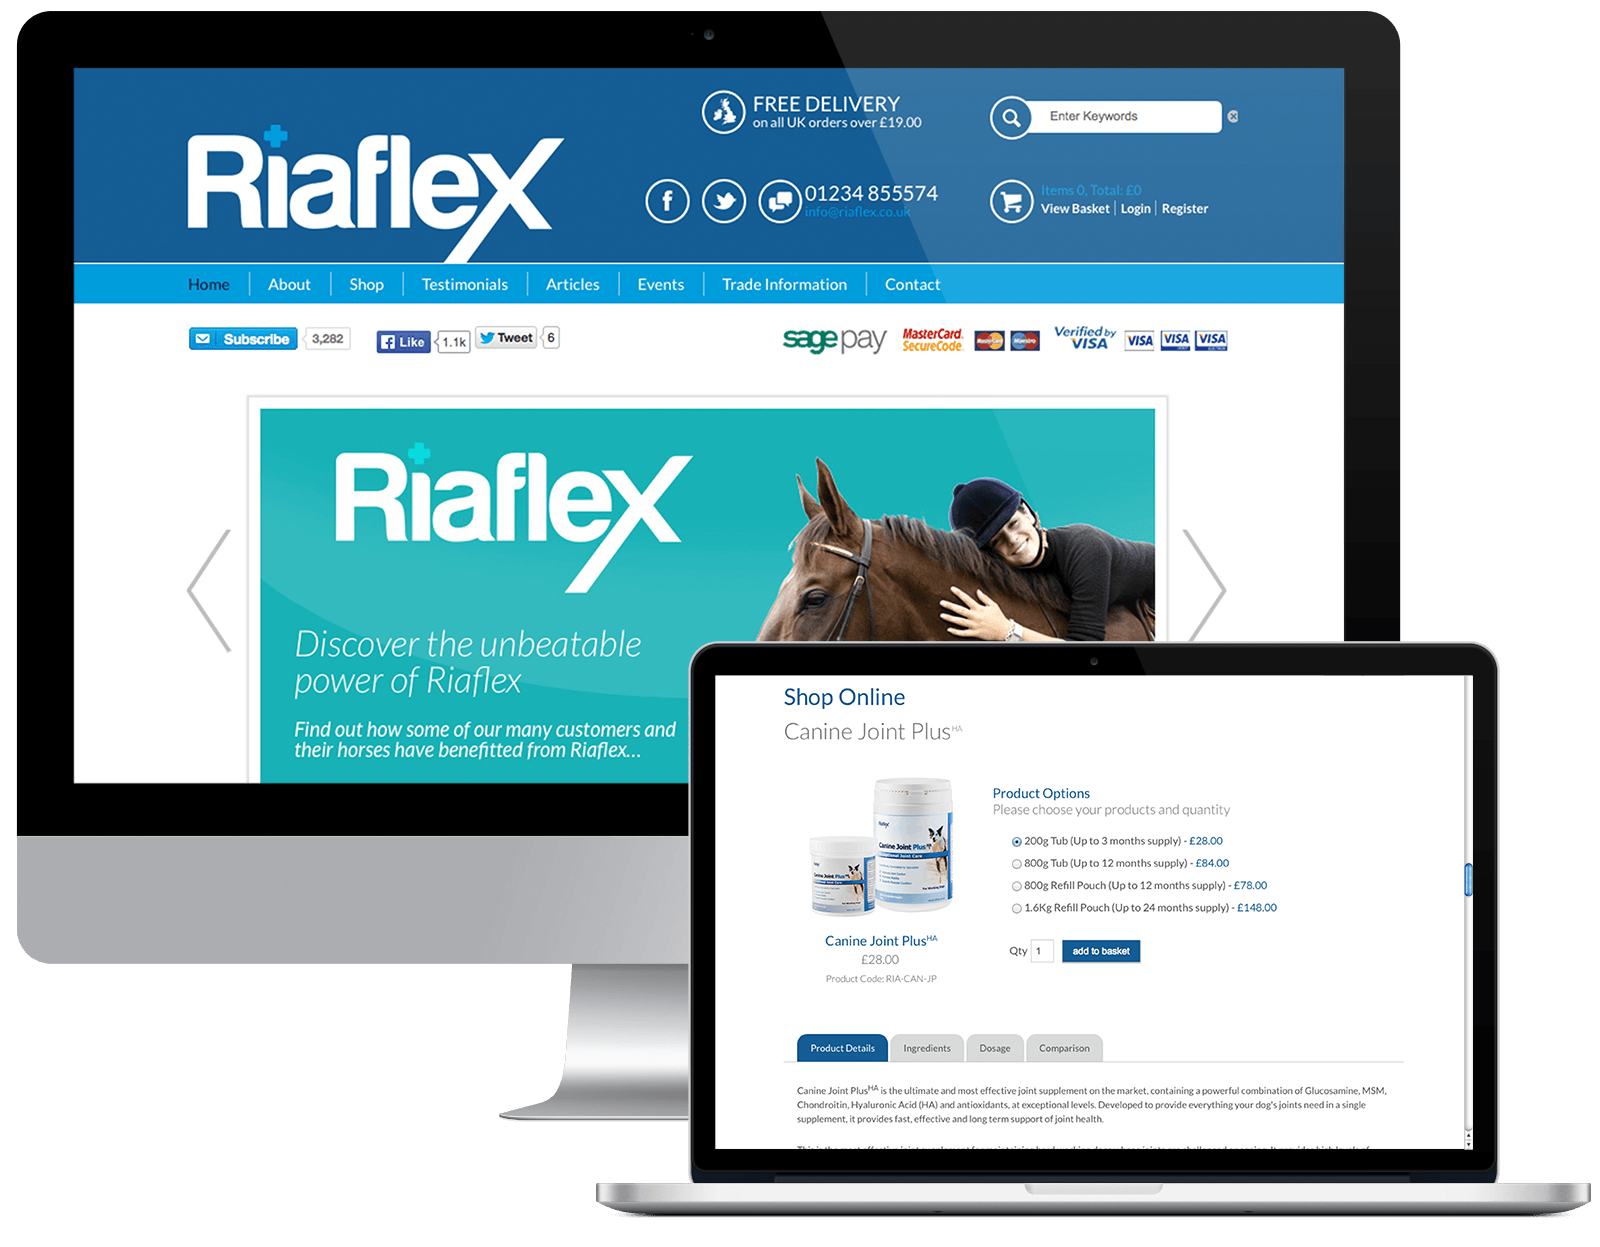 Riaflex - Visit the Website